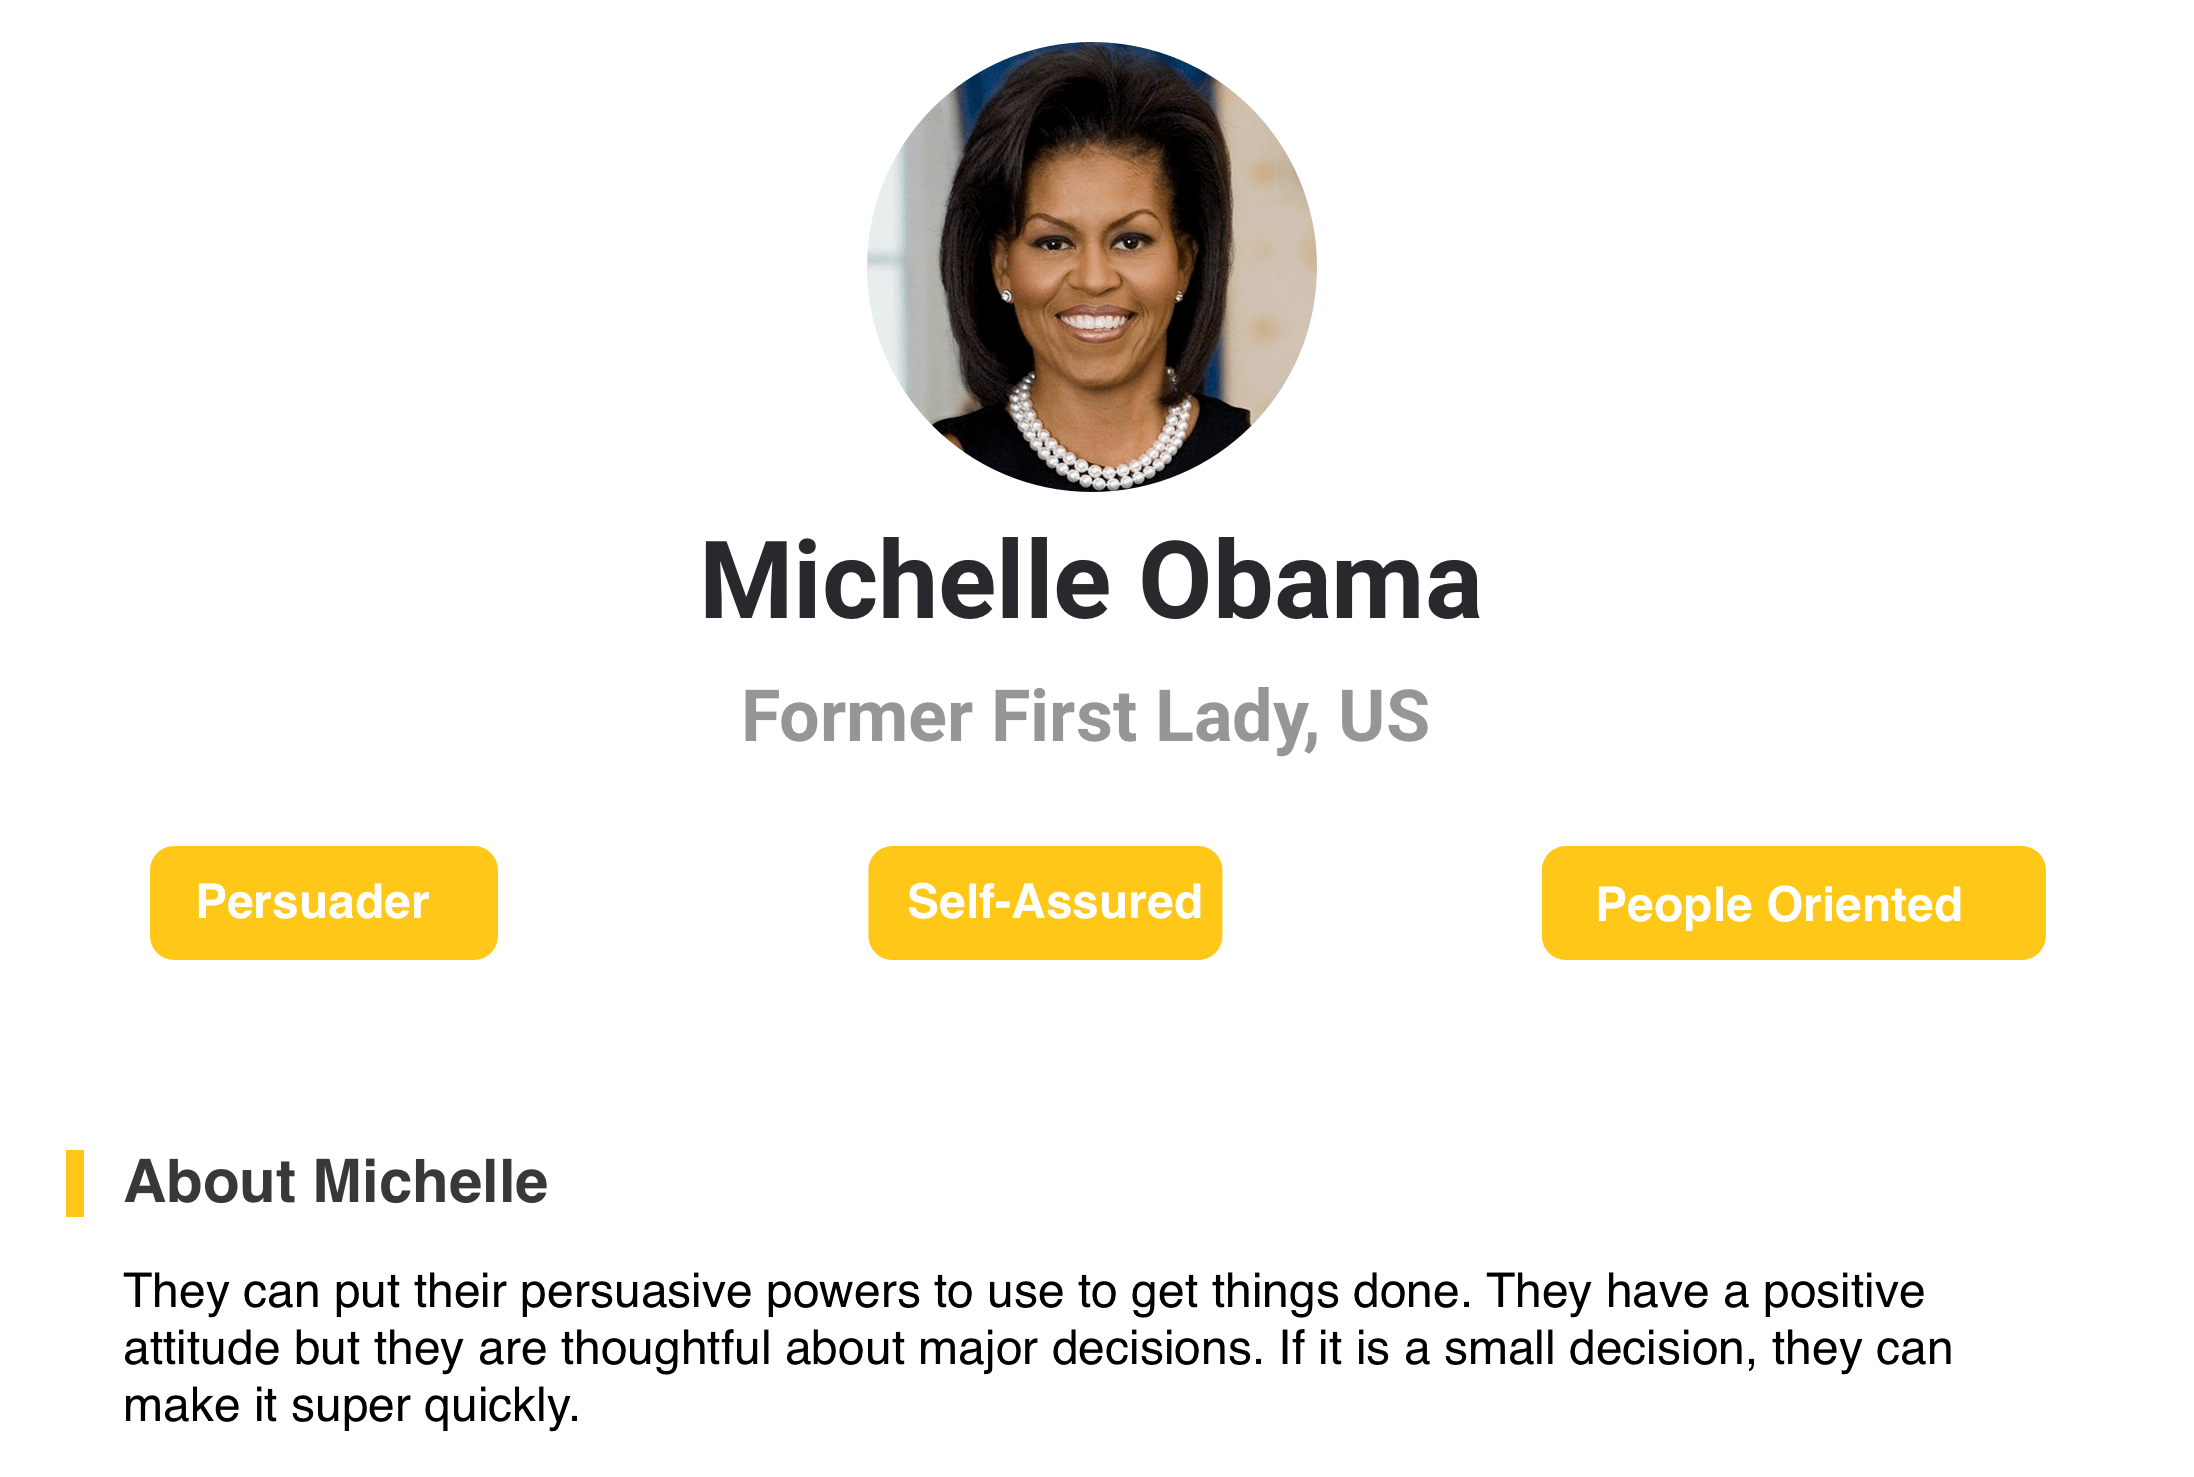 About Michelle